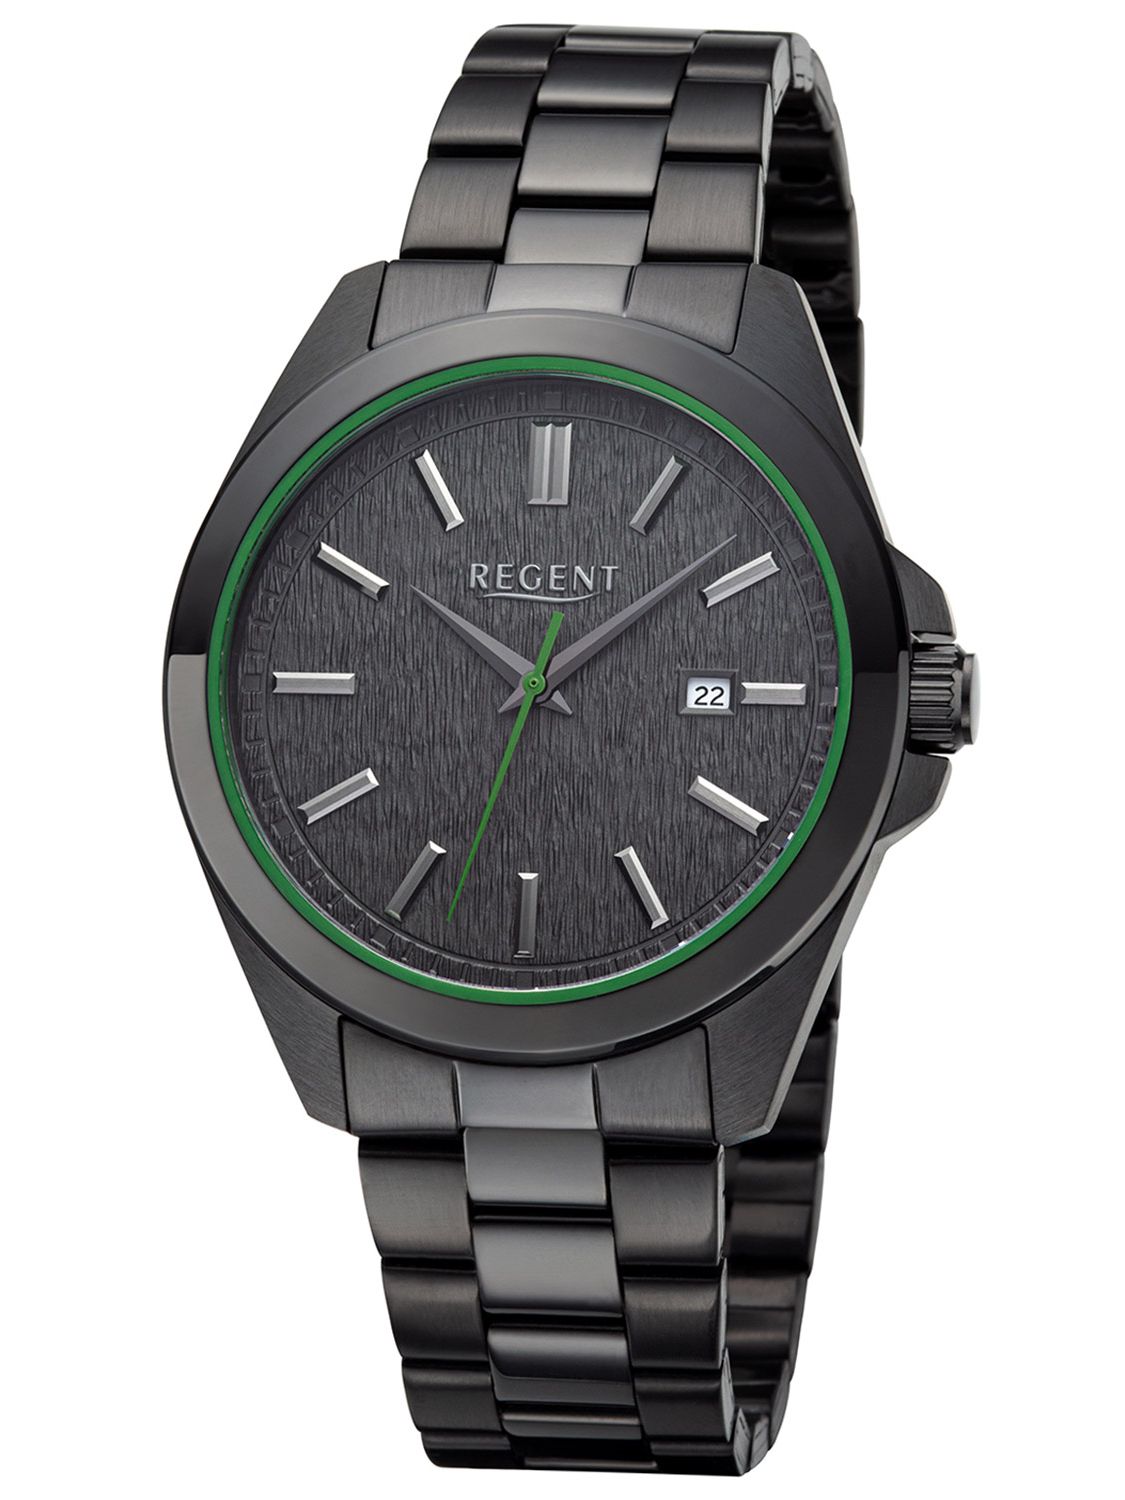 11150788 Regent Black/Green Quartz Watch Men uhrcenter for •